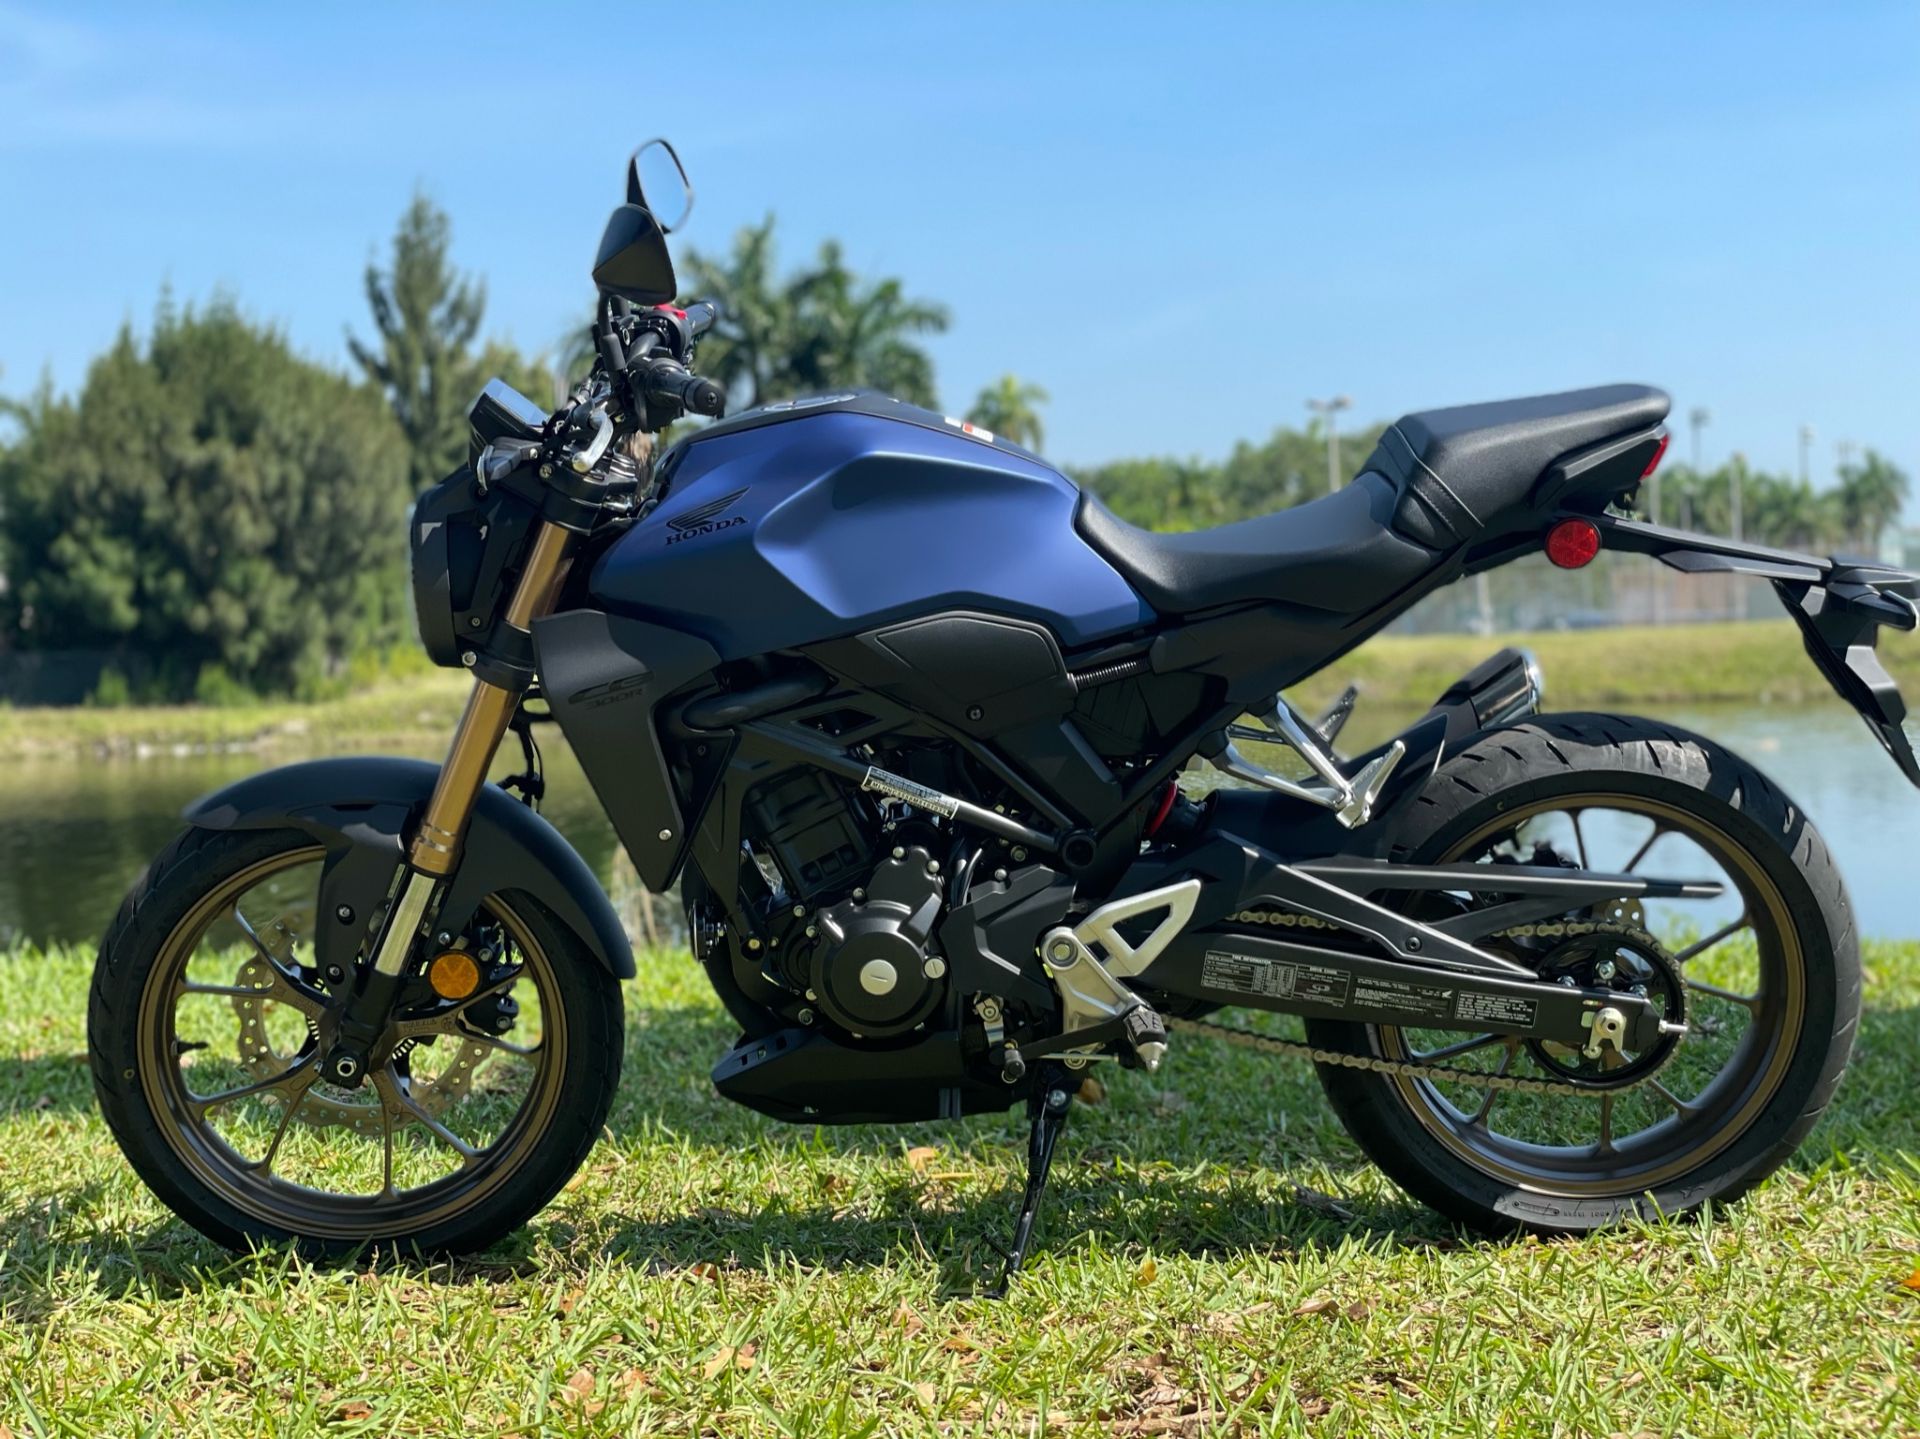 2021 Honda CB300R ABS in North Miami Beach, Florida - Photo 19